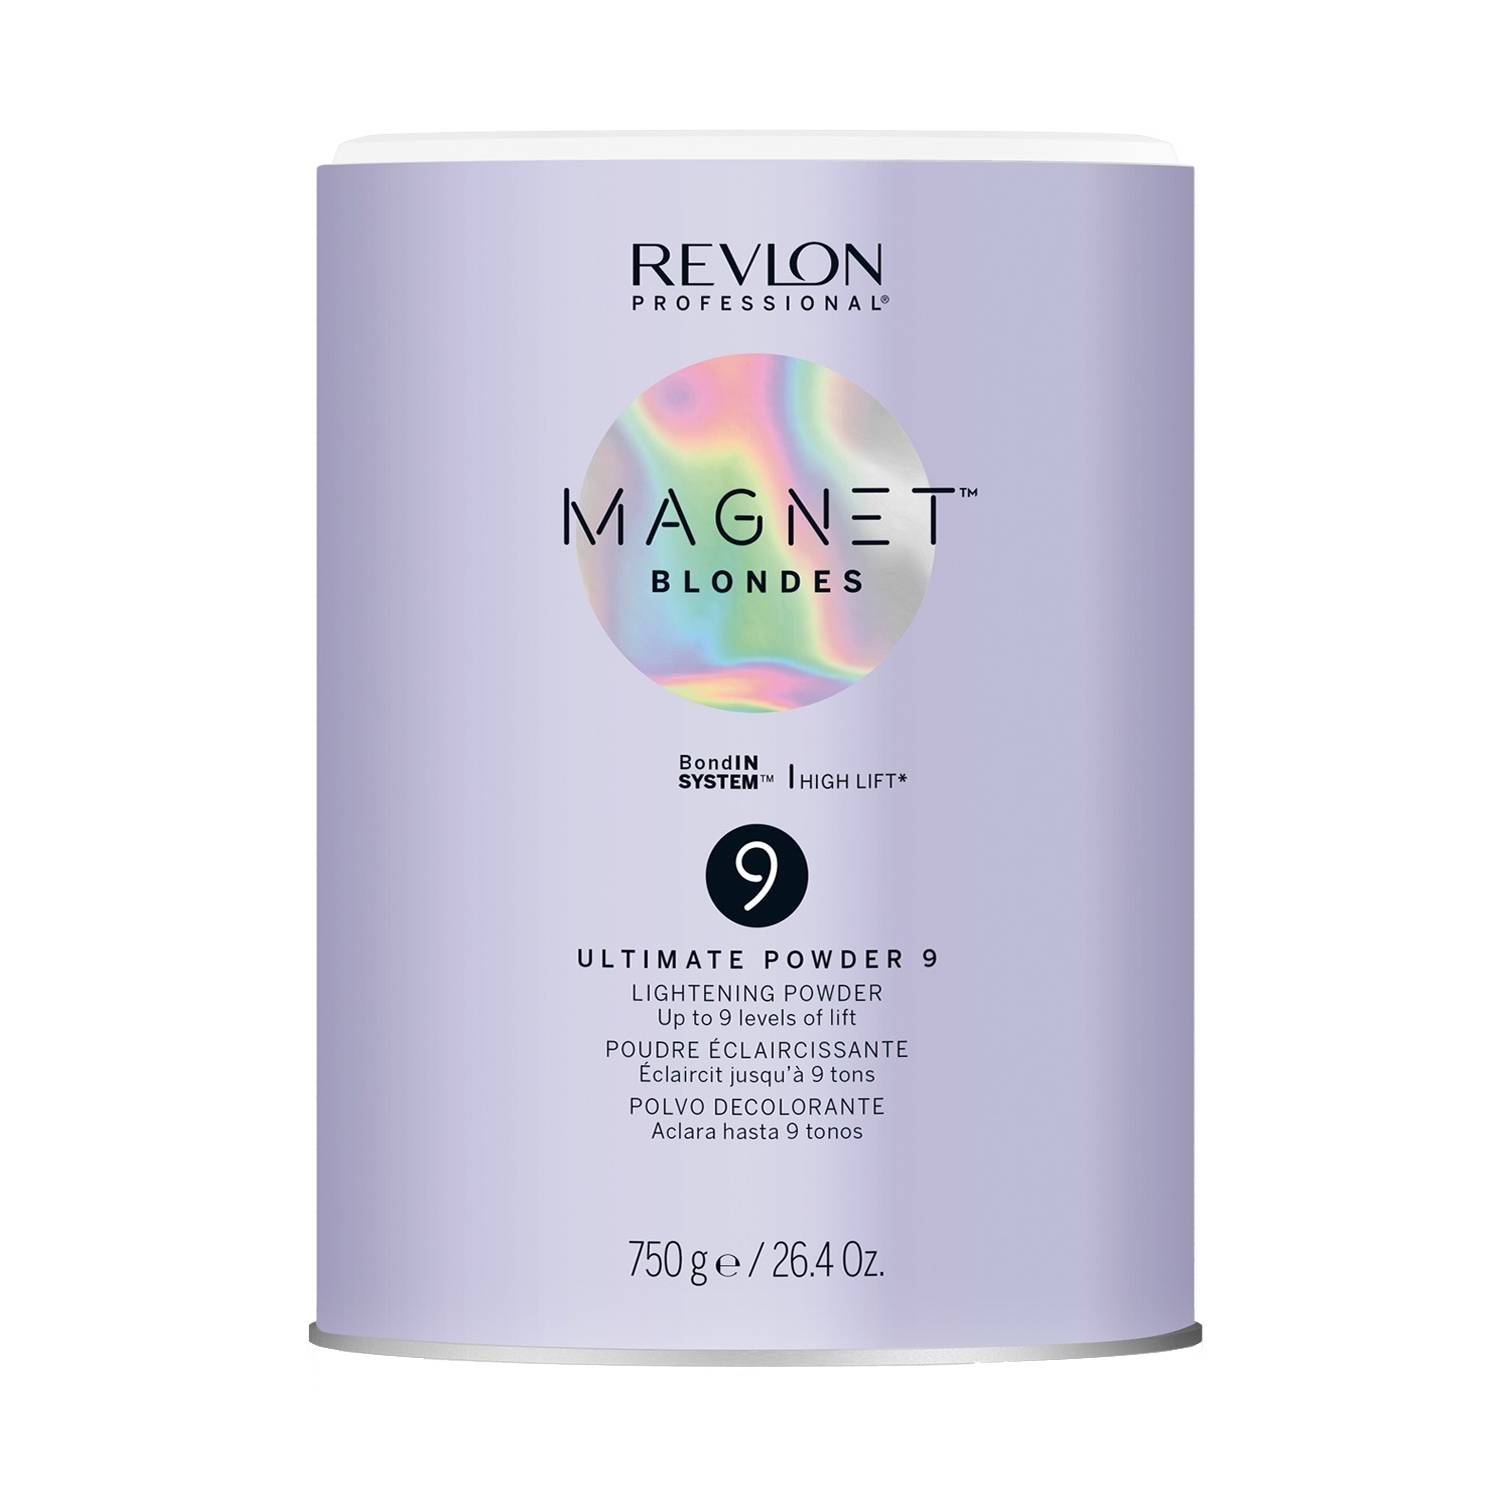 Revlon Professional Нелетучая осветляющая пудра 9 Ultimate Powder Lightening Powder, 750 г (Revlon Professional, Magnet Blondes)